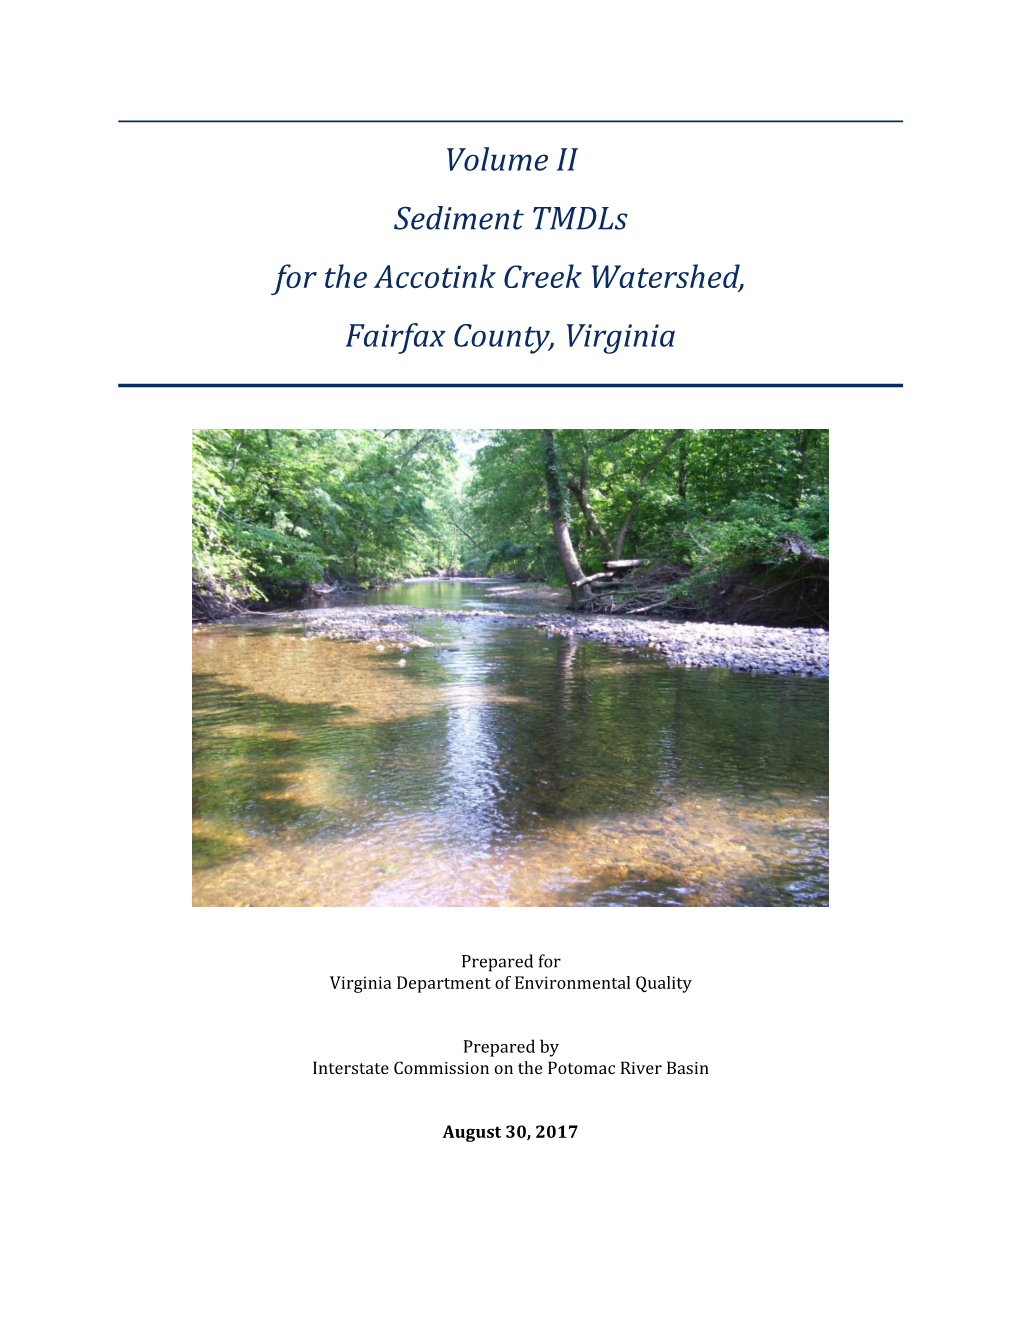 Virginia Department of Environmental Quality – Accotink Creek Stressor